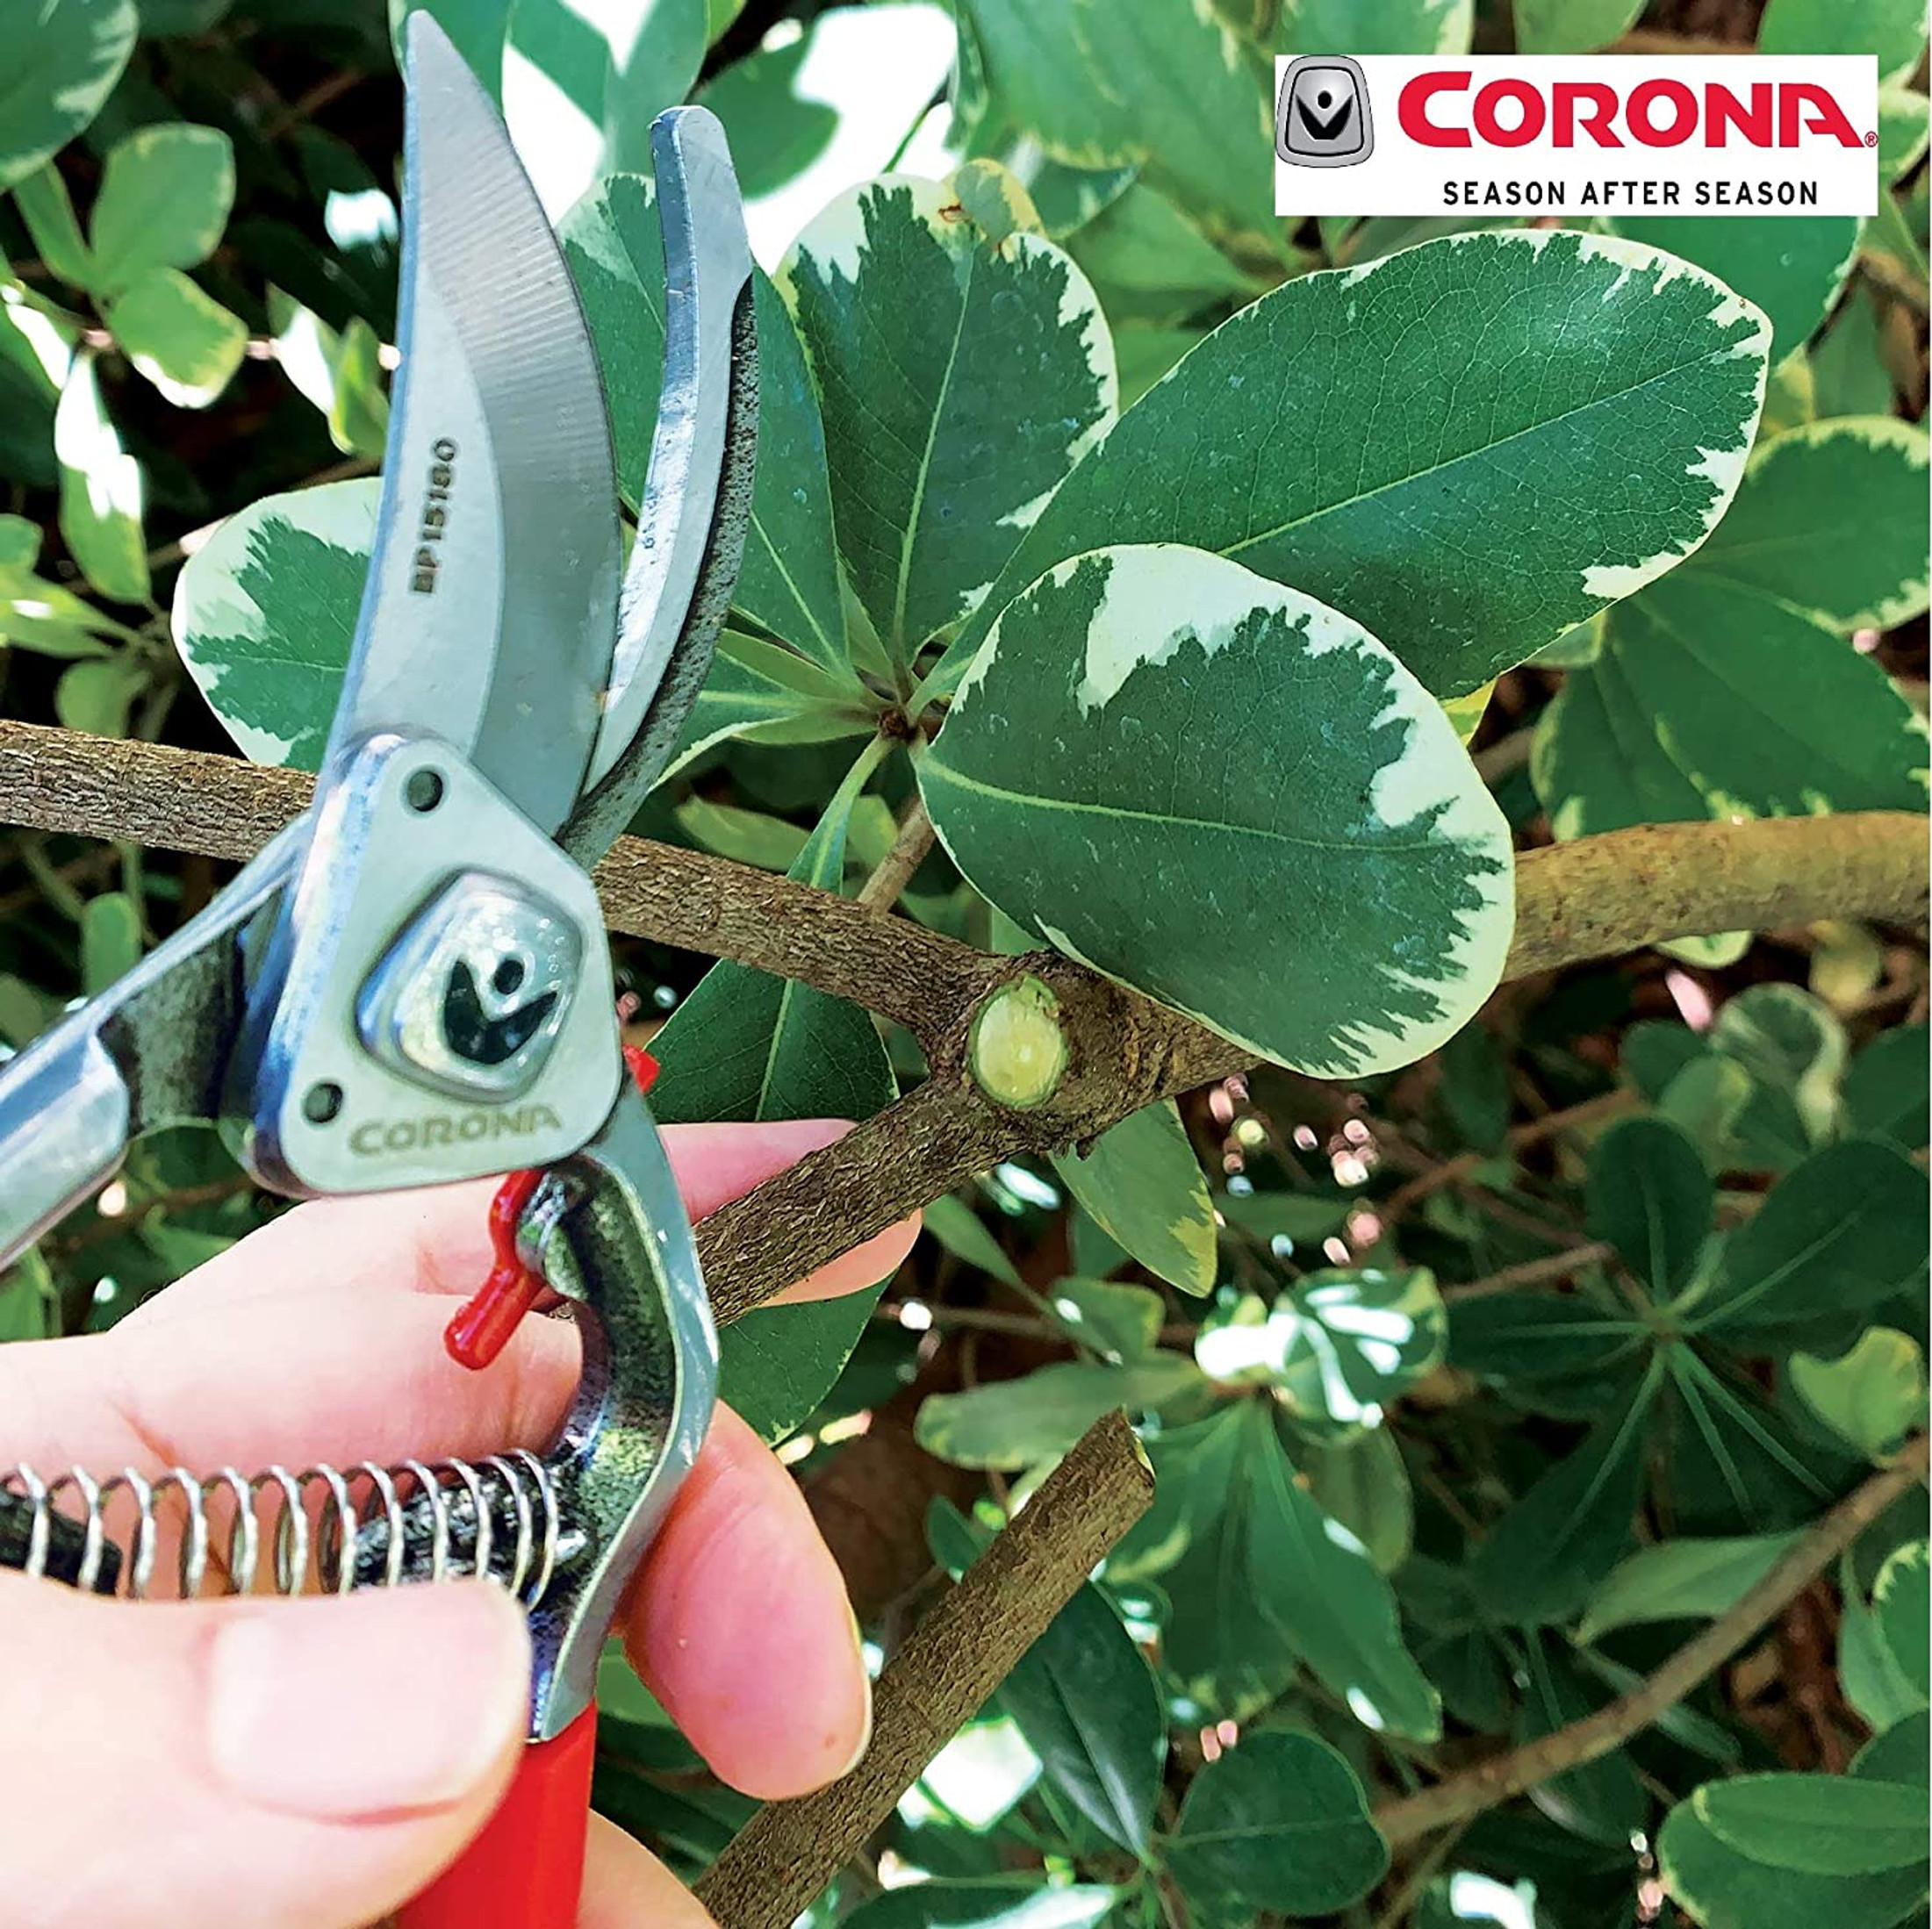 Corona Forged Steel ClassicCUT Bypass Hand Pruner-1" Cut Stem/Branch Shears